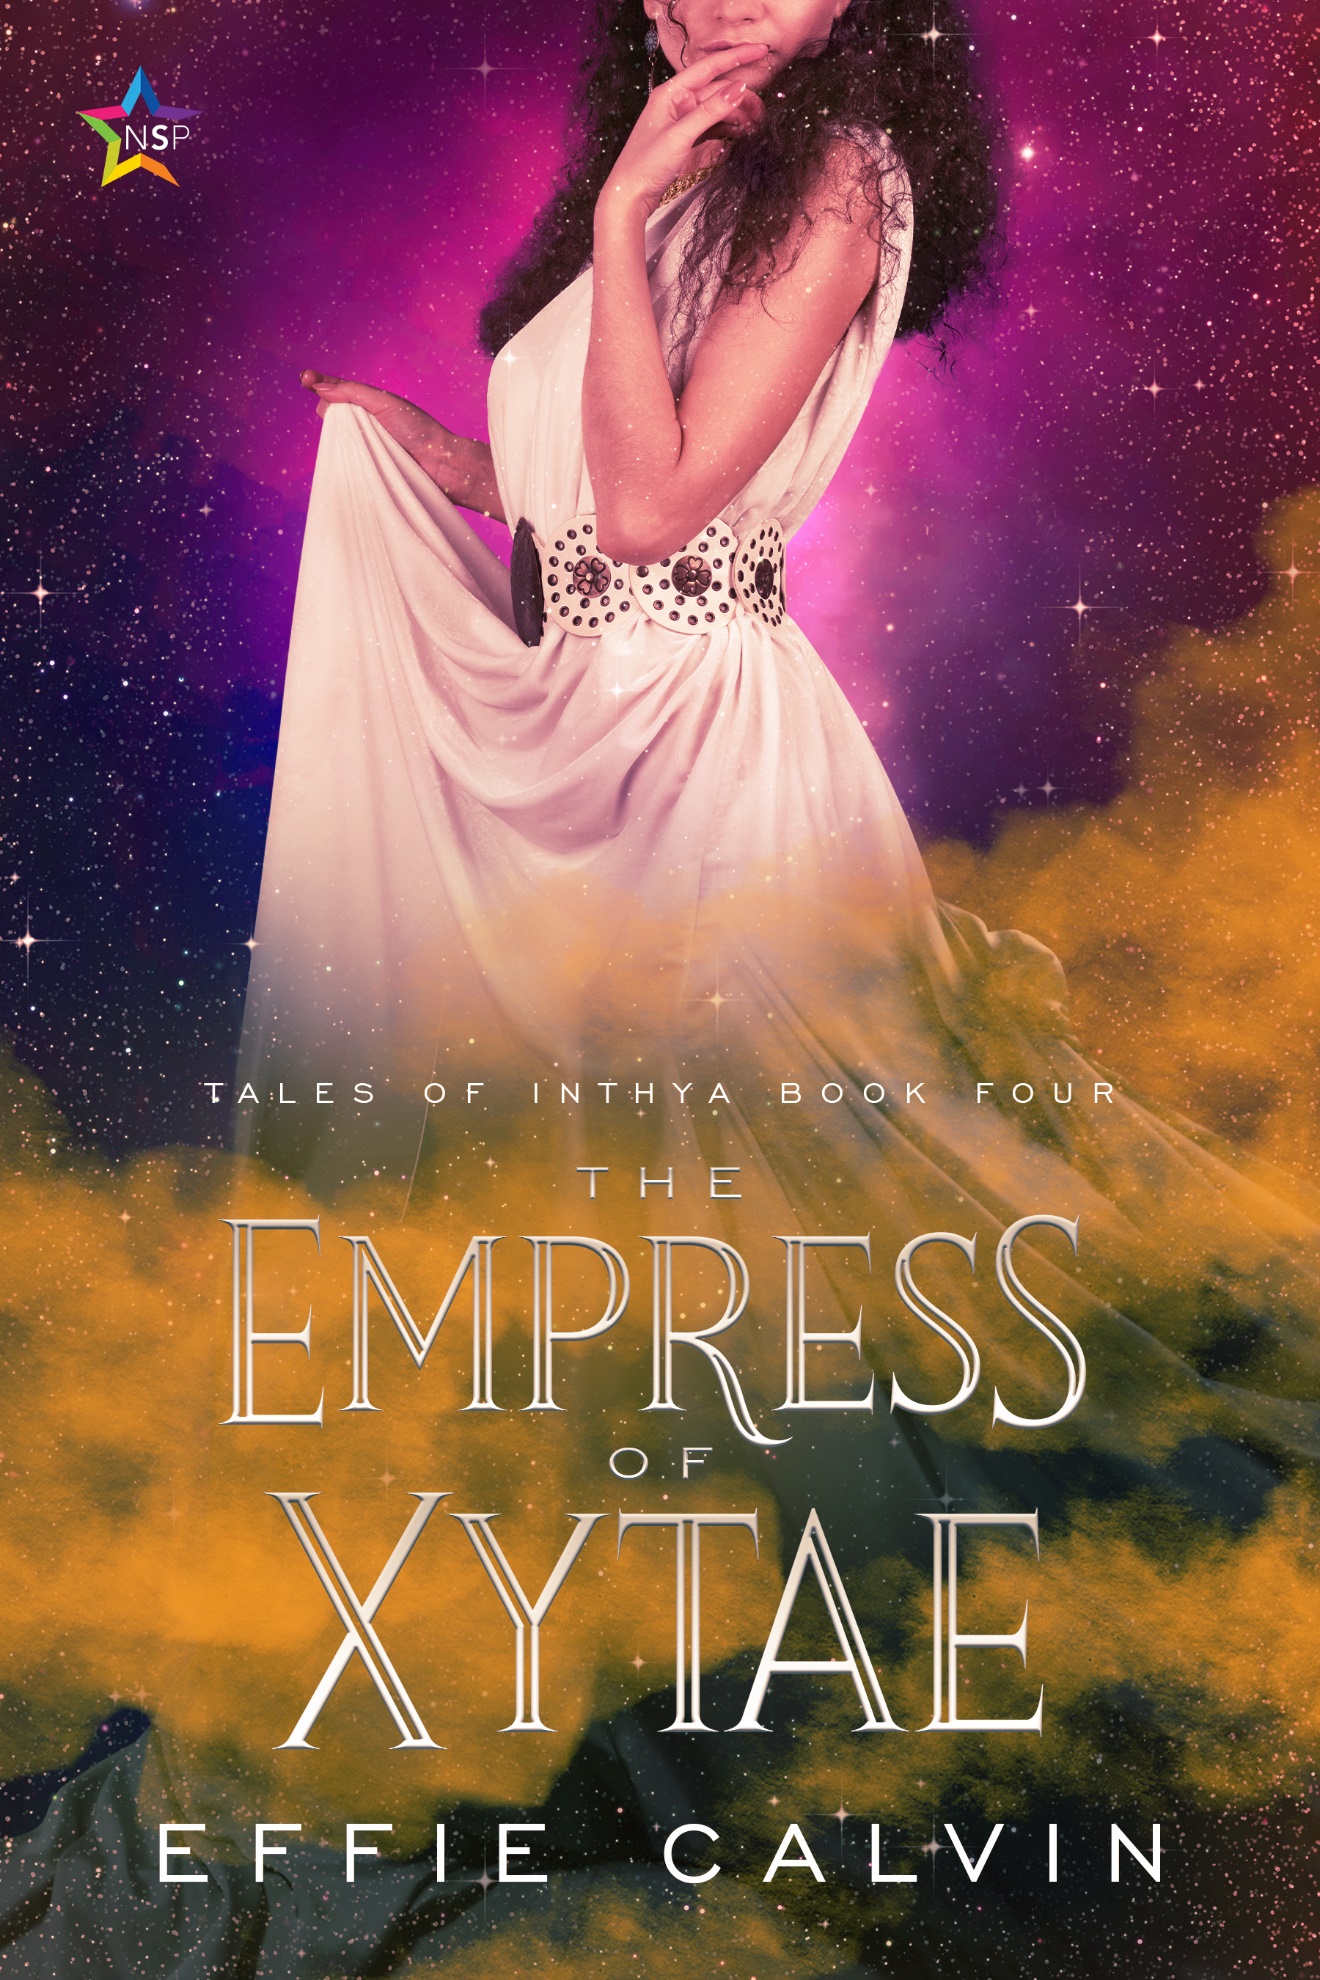 The Empress of Xytae